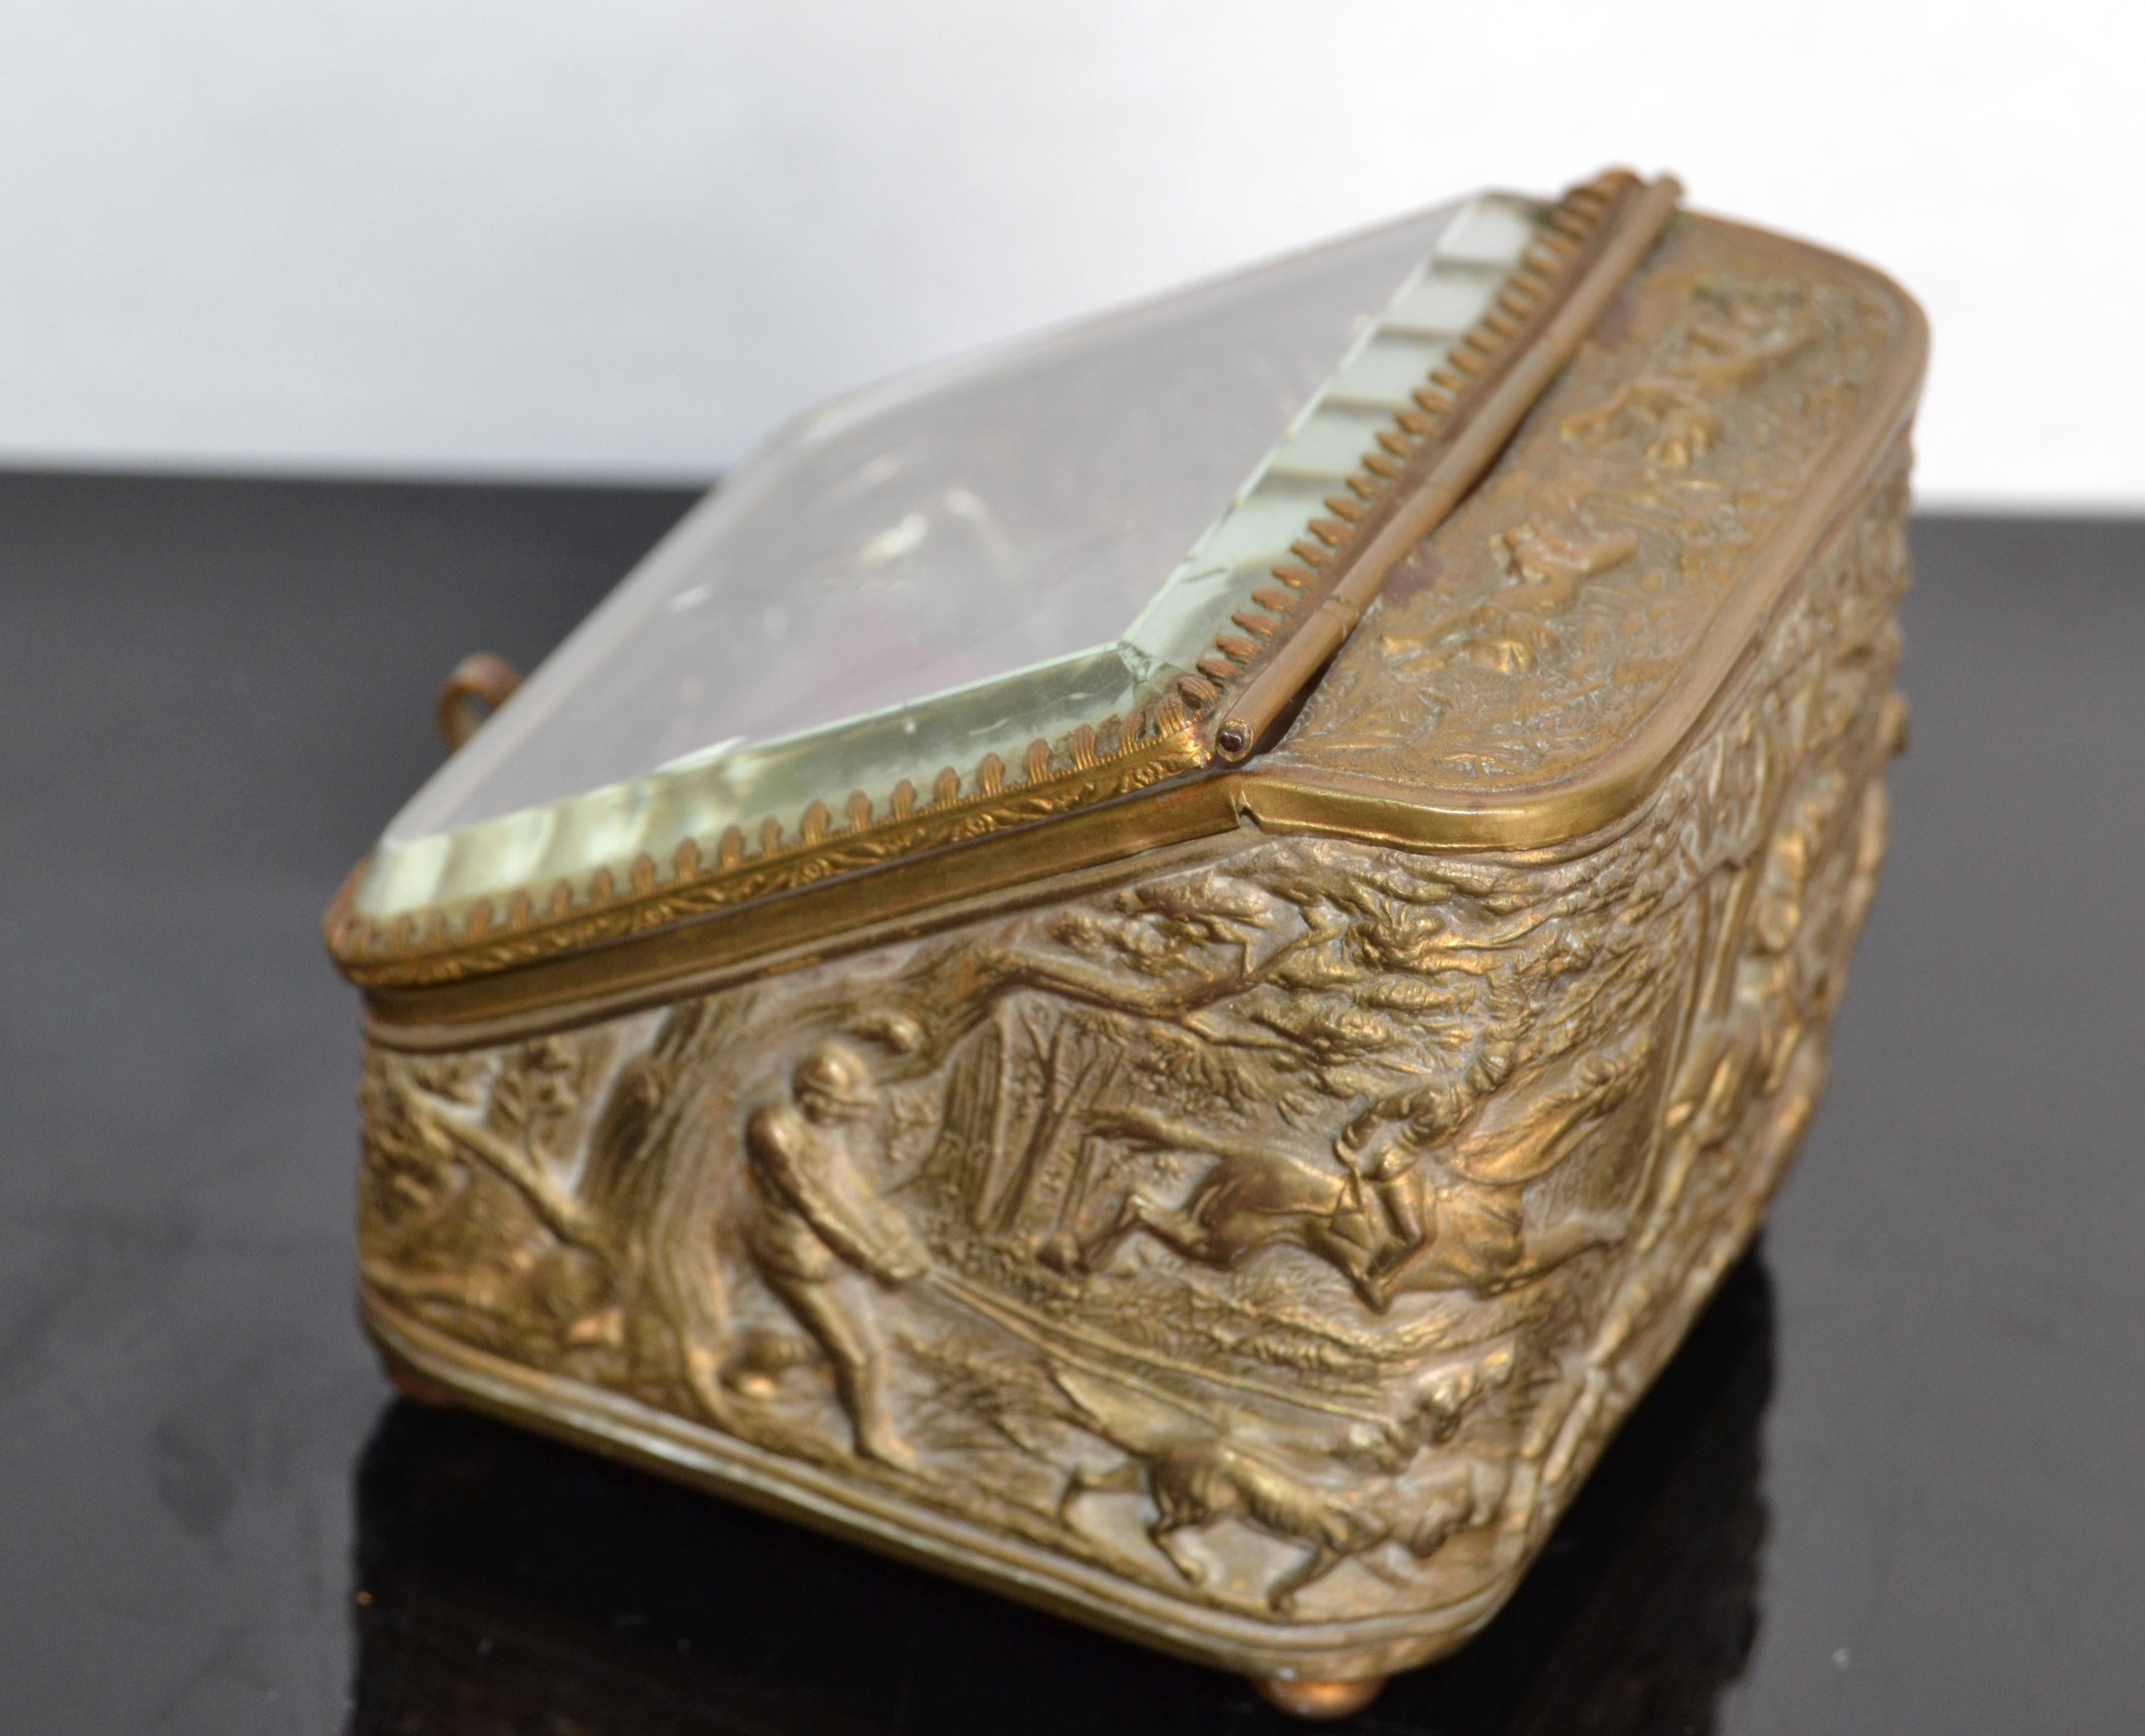 Antique French Napoleon III Era Pocket Watch Display Casket Box Hunt Theme Boar For Sale 4